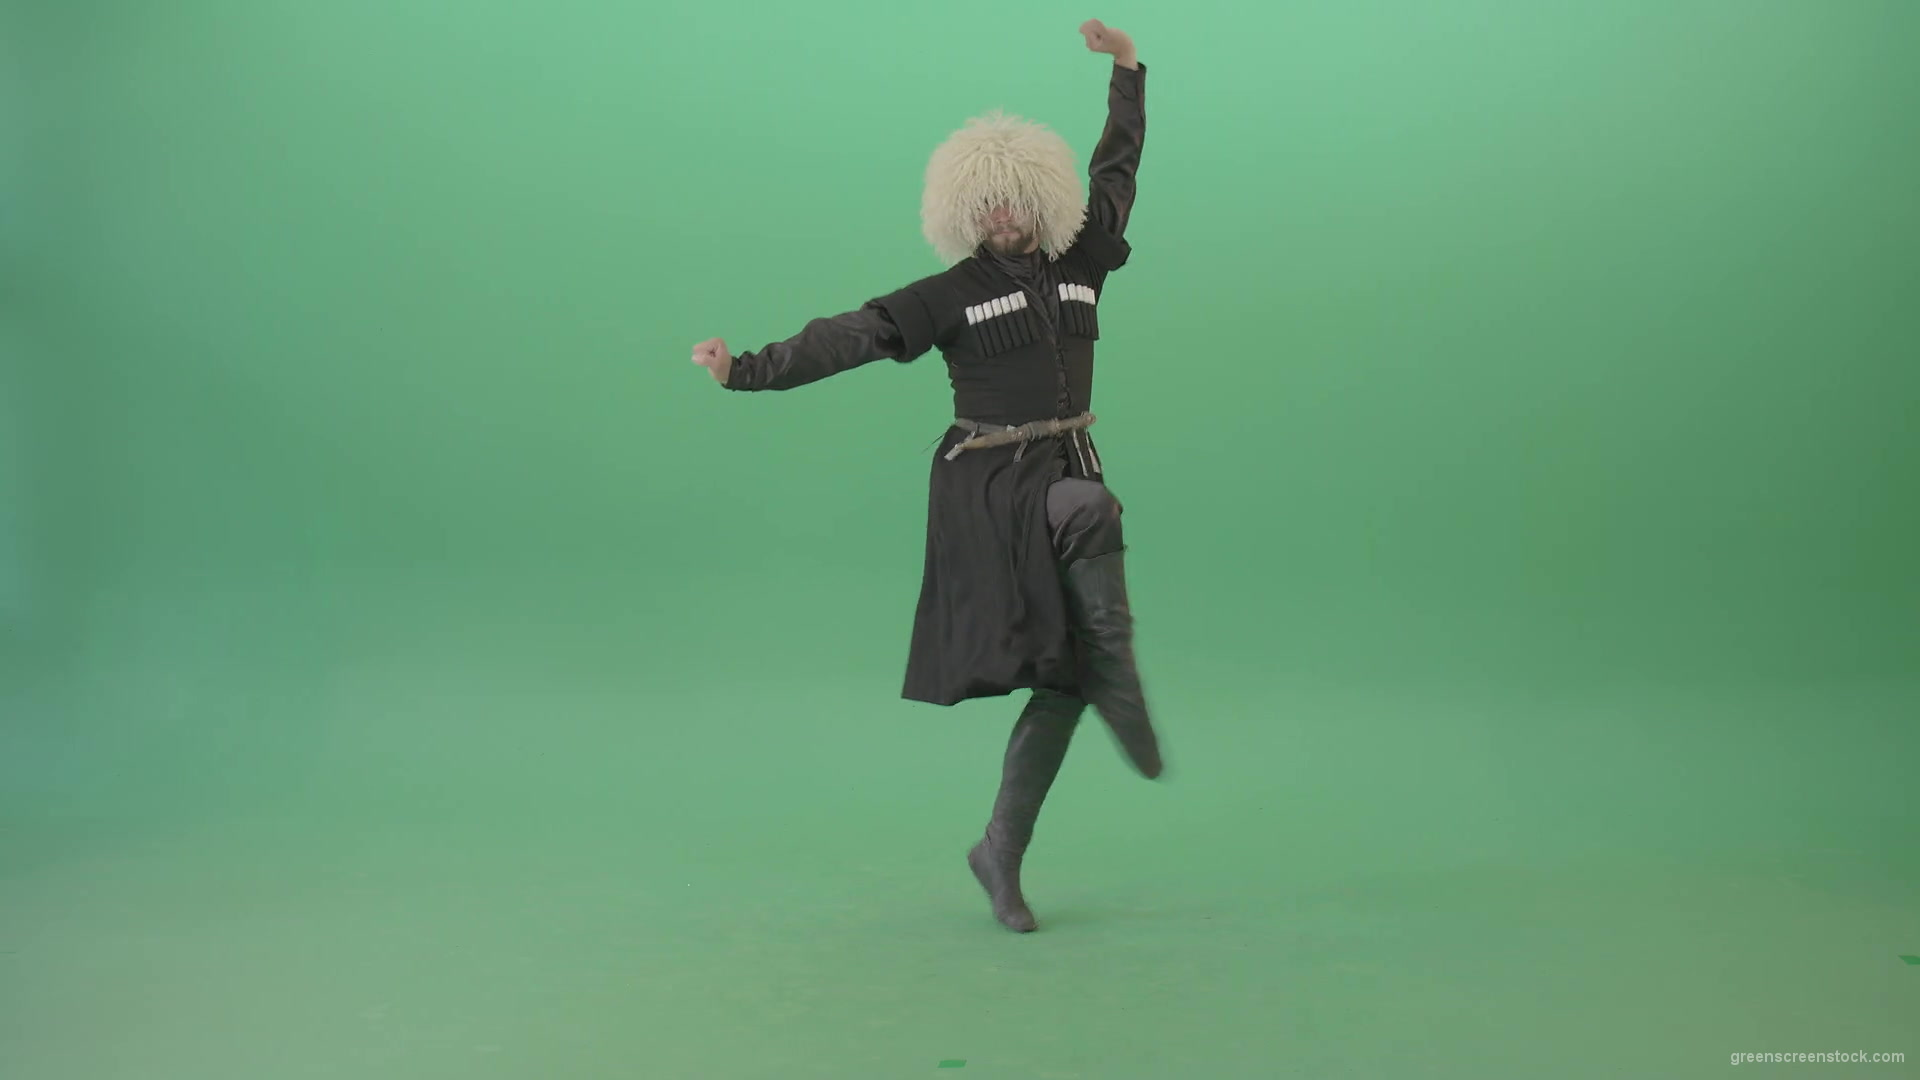 Caucasian-Man-jumping-on-one-leg-in-folk-traditional-Georgia-Dance-on-Green-Screen-4K-Video-Footage-1920_005 Green Screen Stock